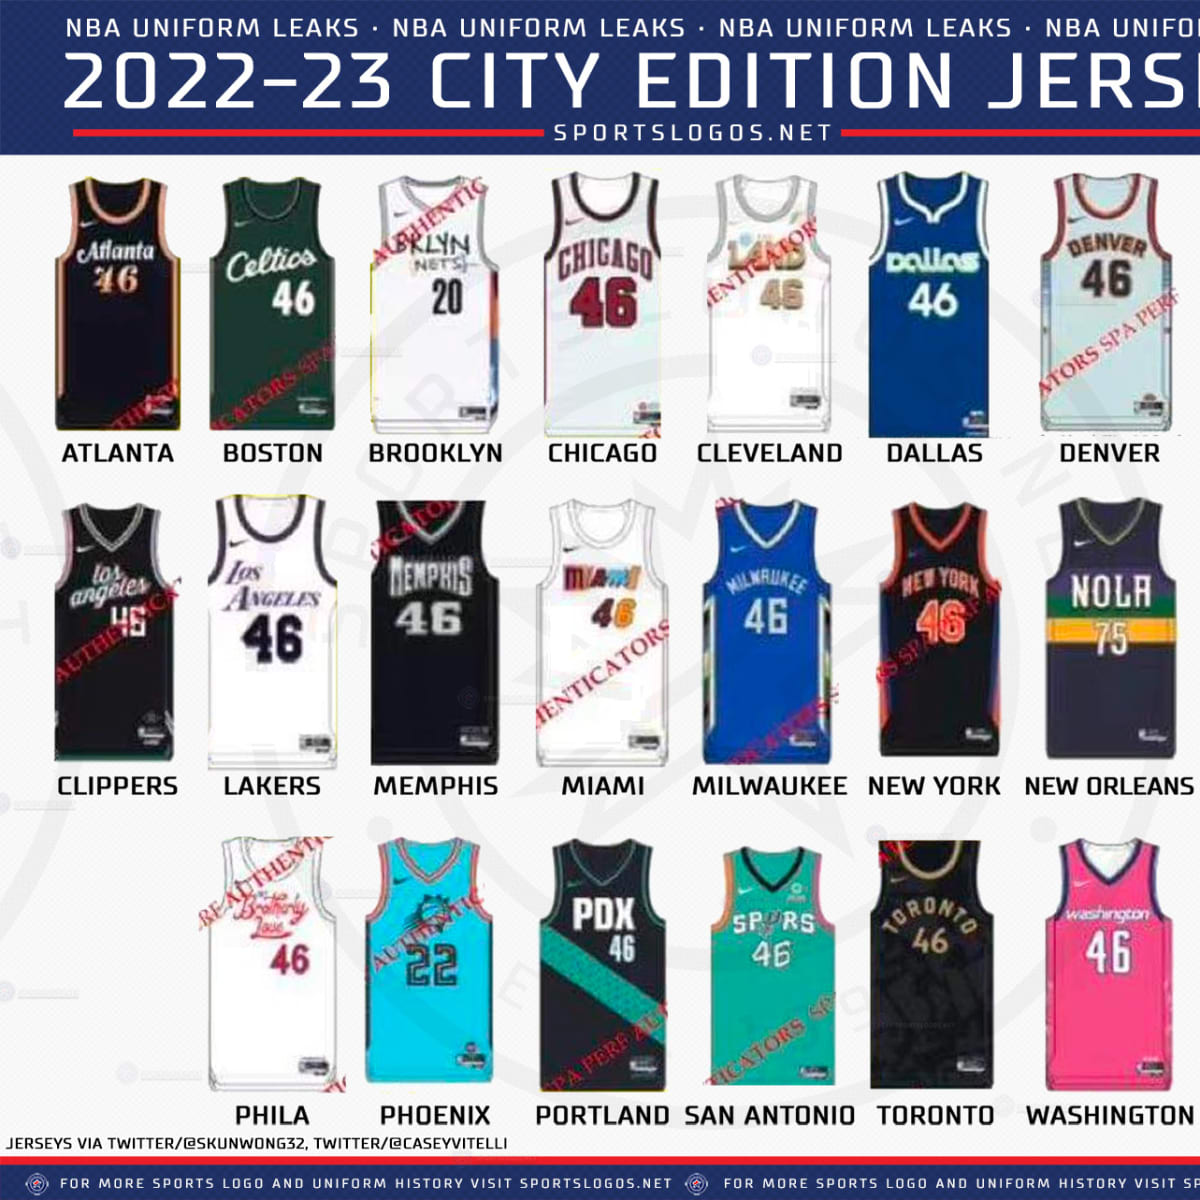 Atlanta Hawks New Nike City Edition Jerseys Appear Online - Sports  Illustrated Atlanta Hawks News, Analysis and More